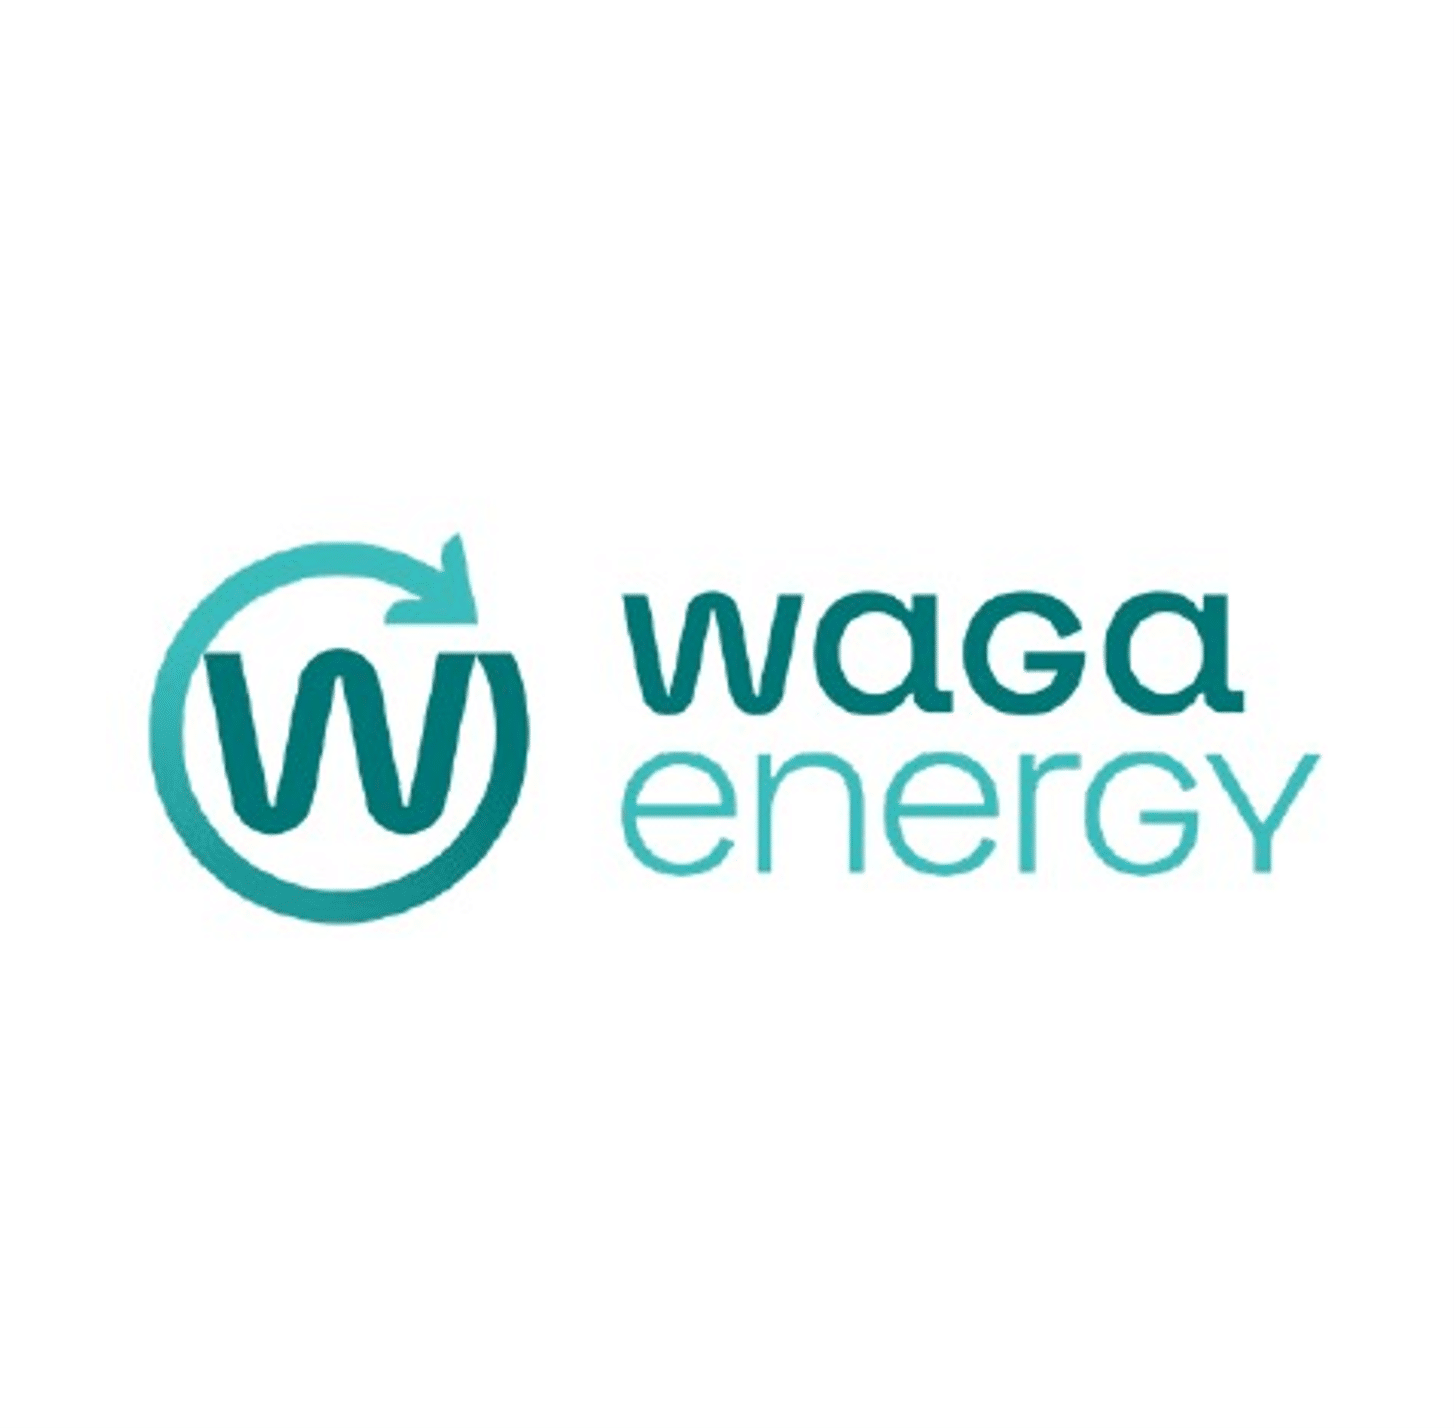 WAGA ENERGY